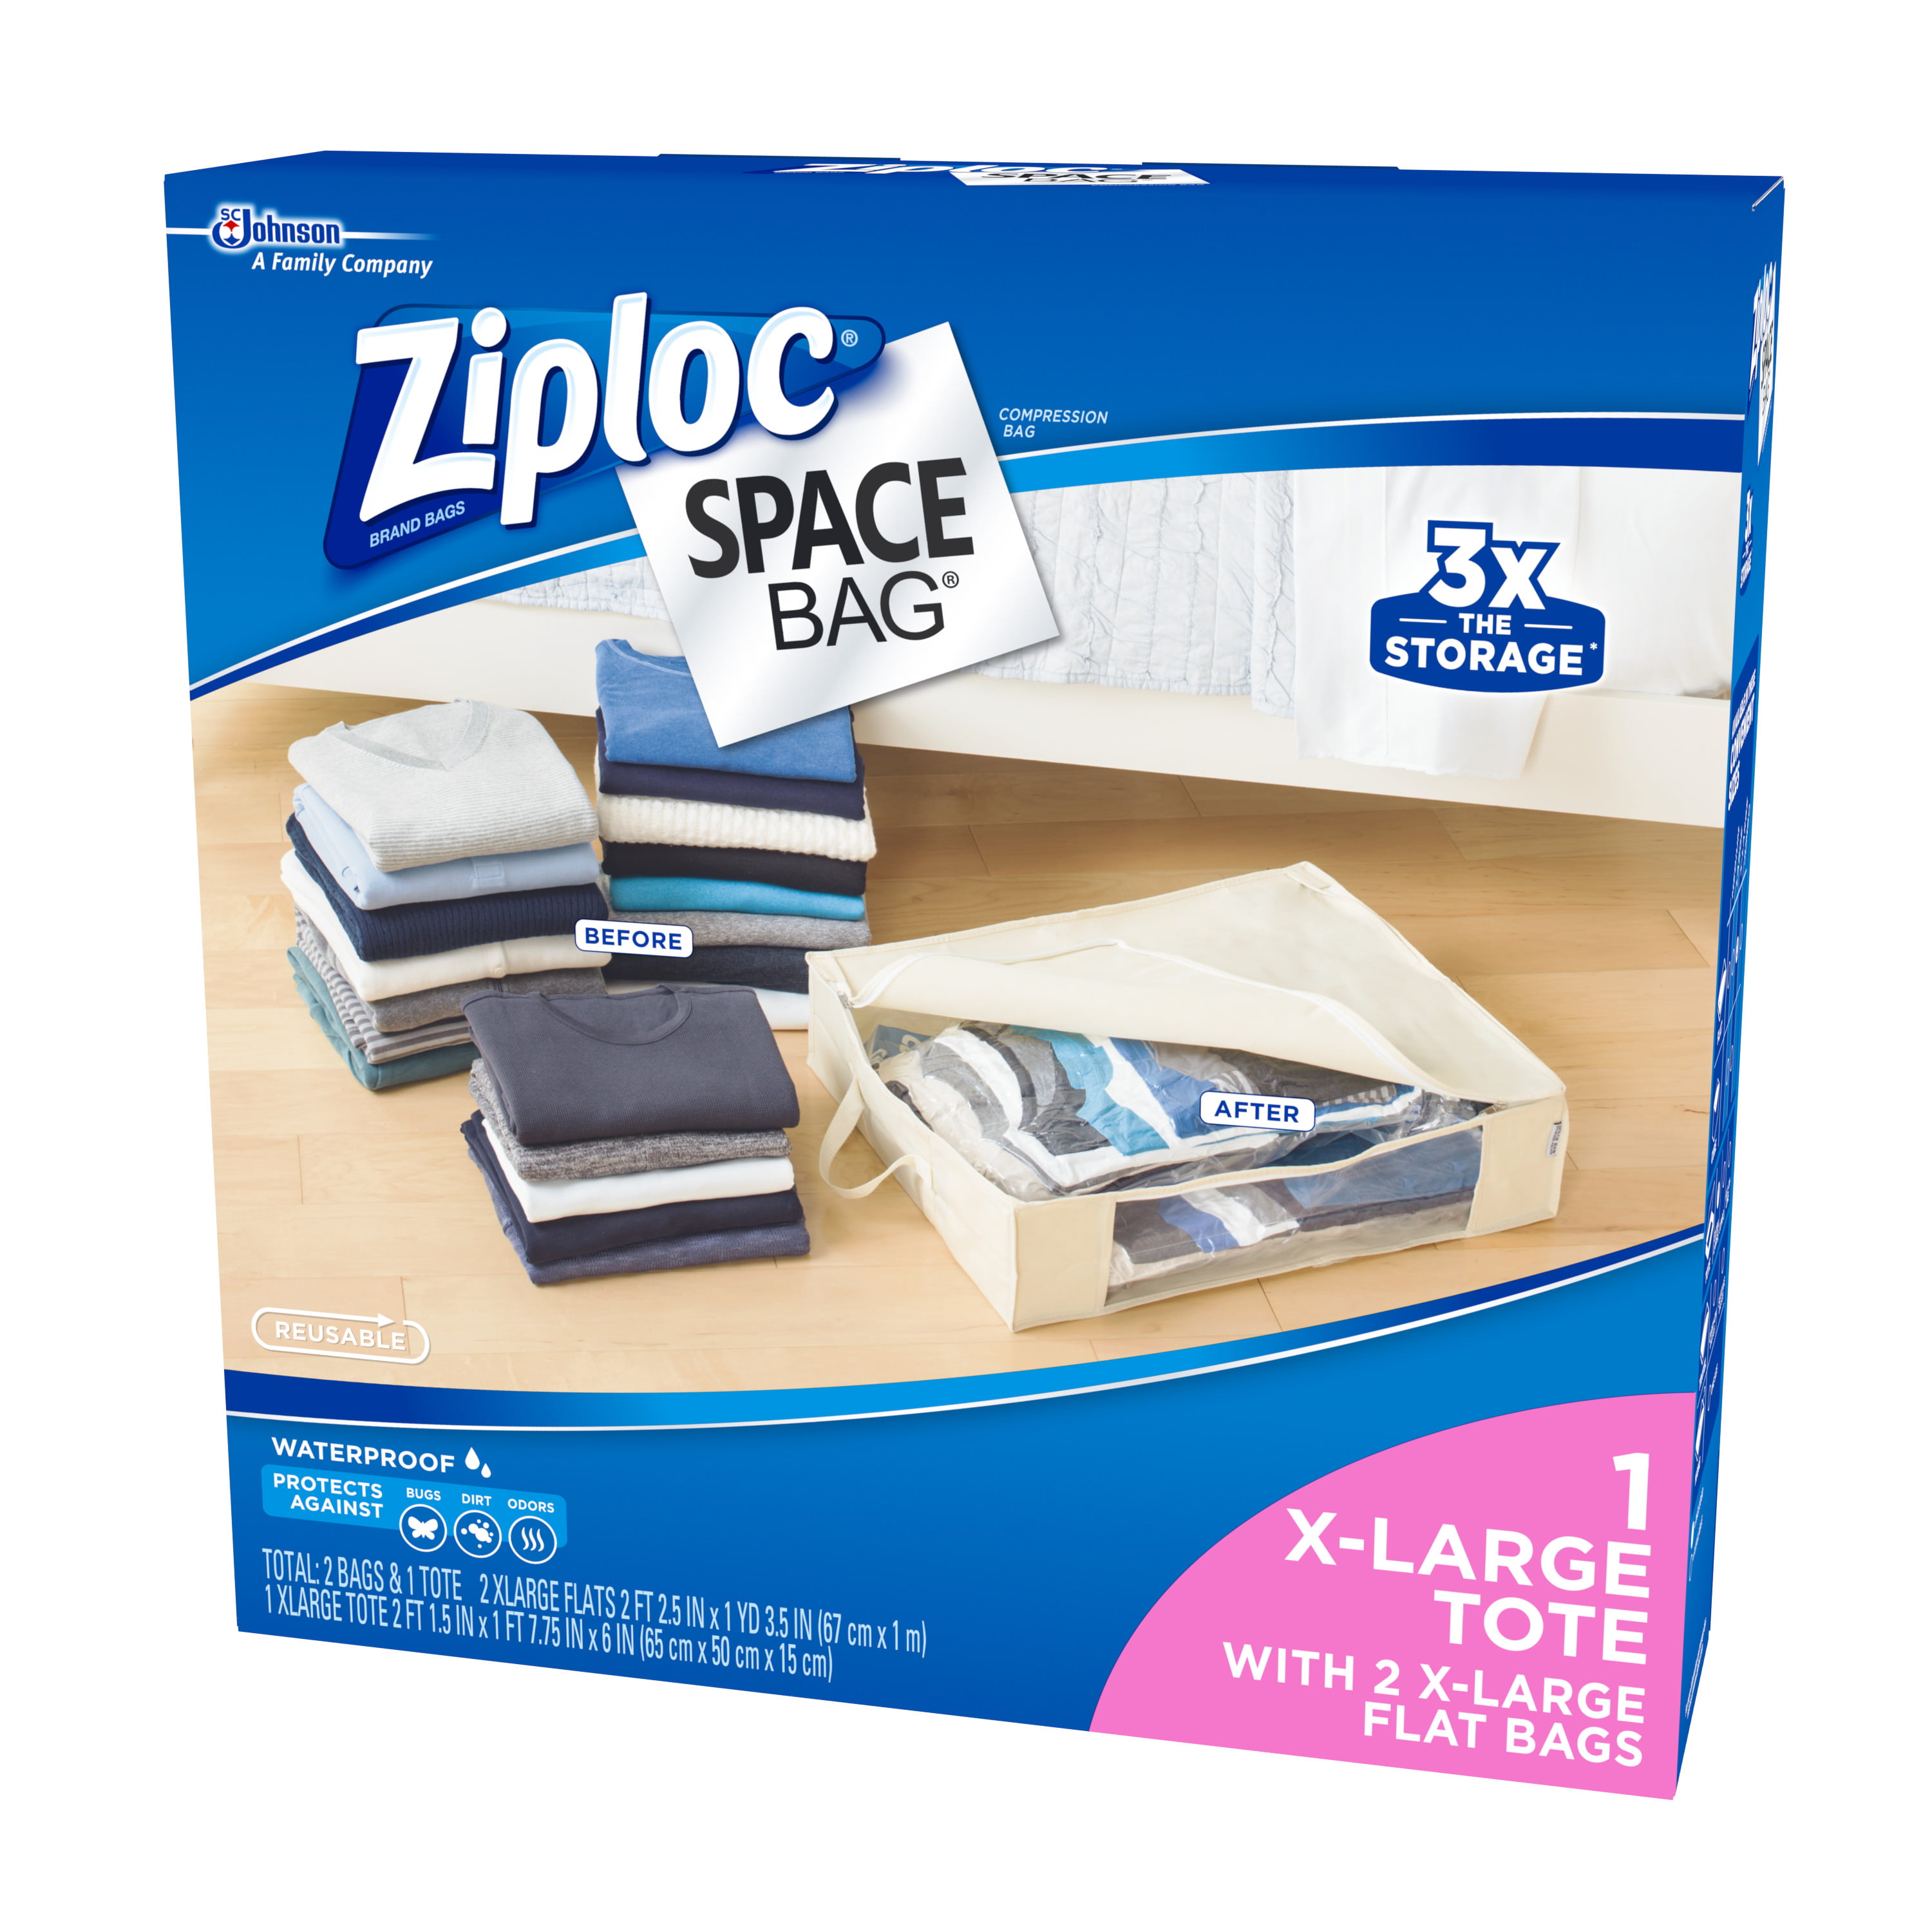 Johnson Ziploc Brand Bags Space Bag Flat Bag Organizer System 